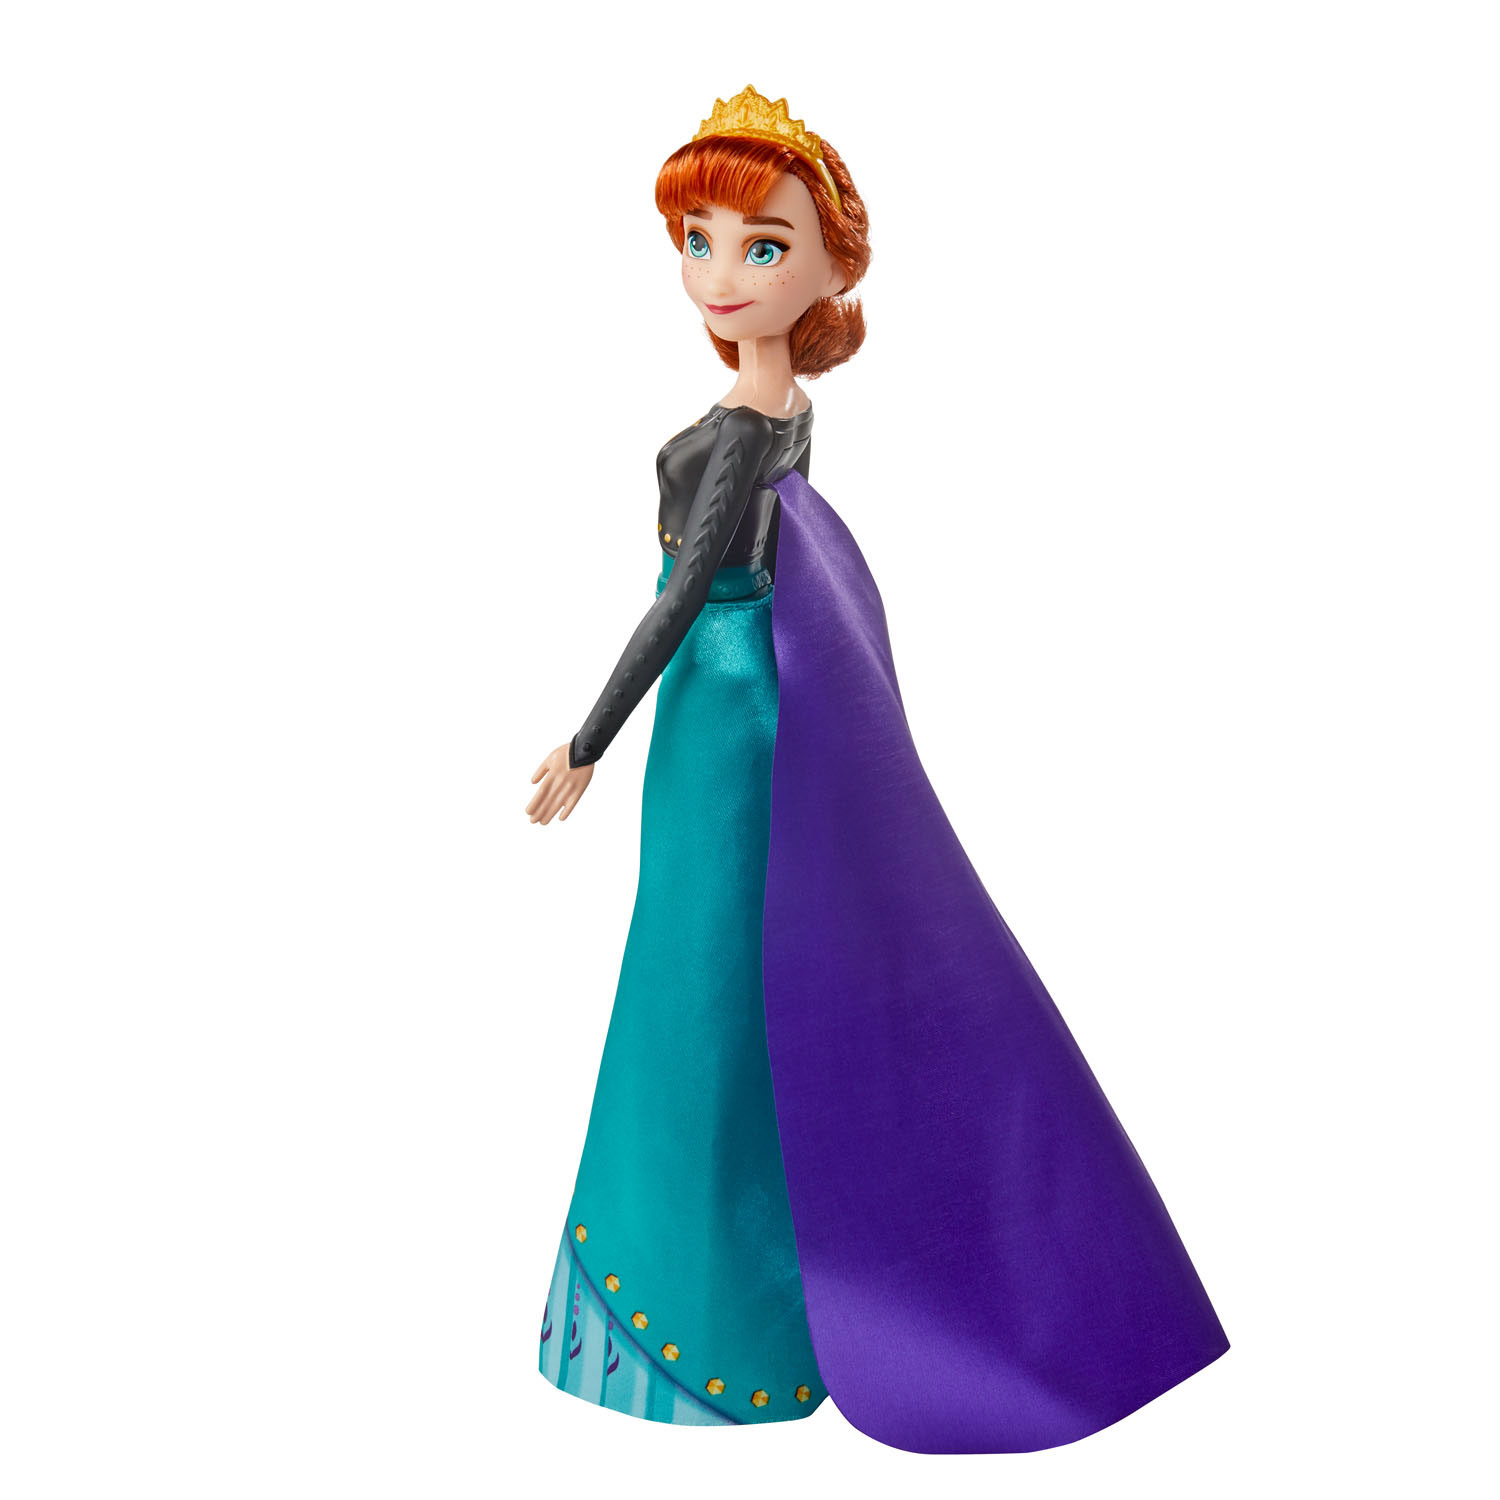 Frozen 2 Anna Koningin - Pop